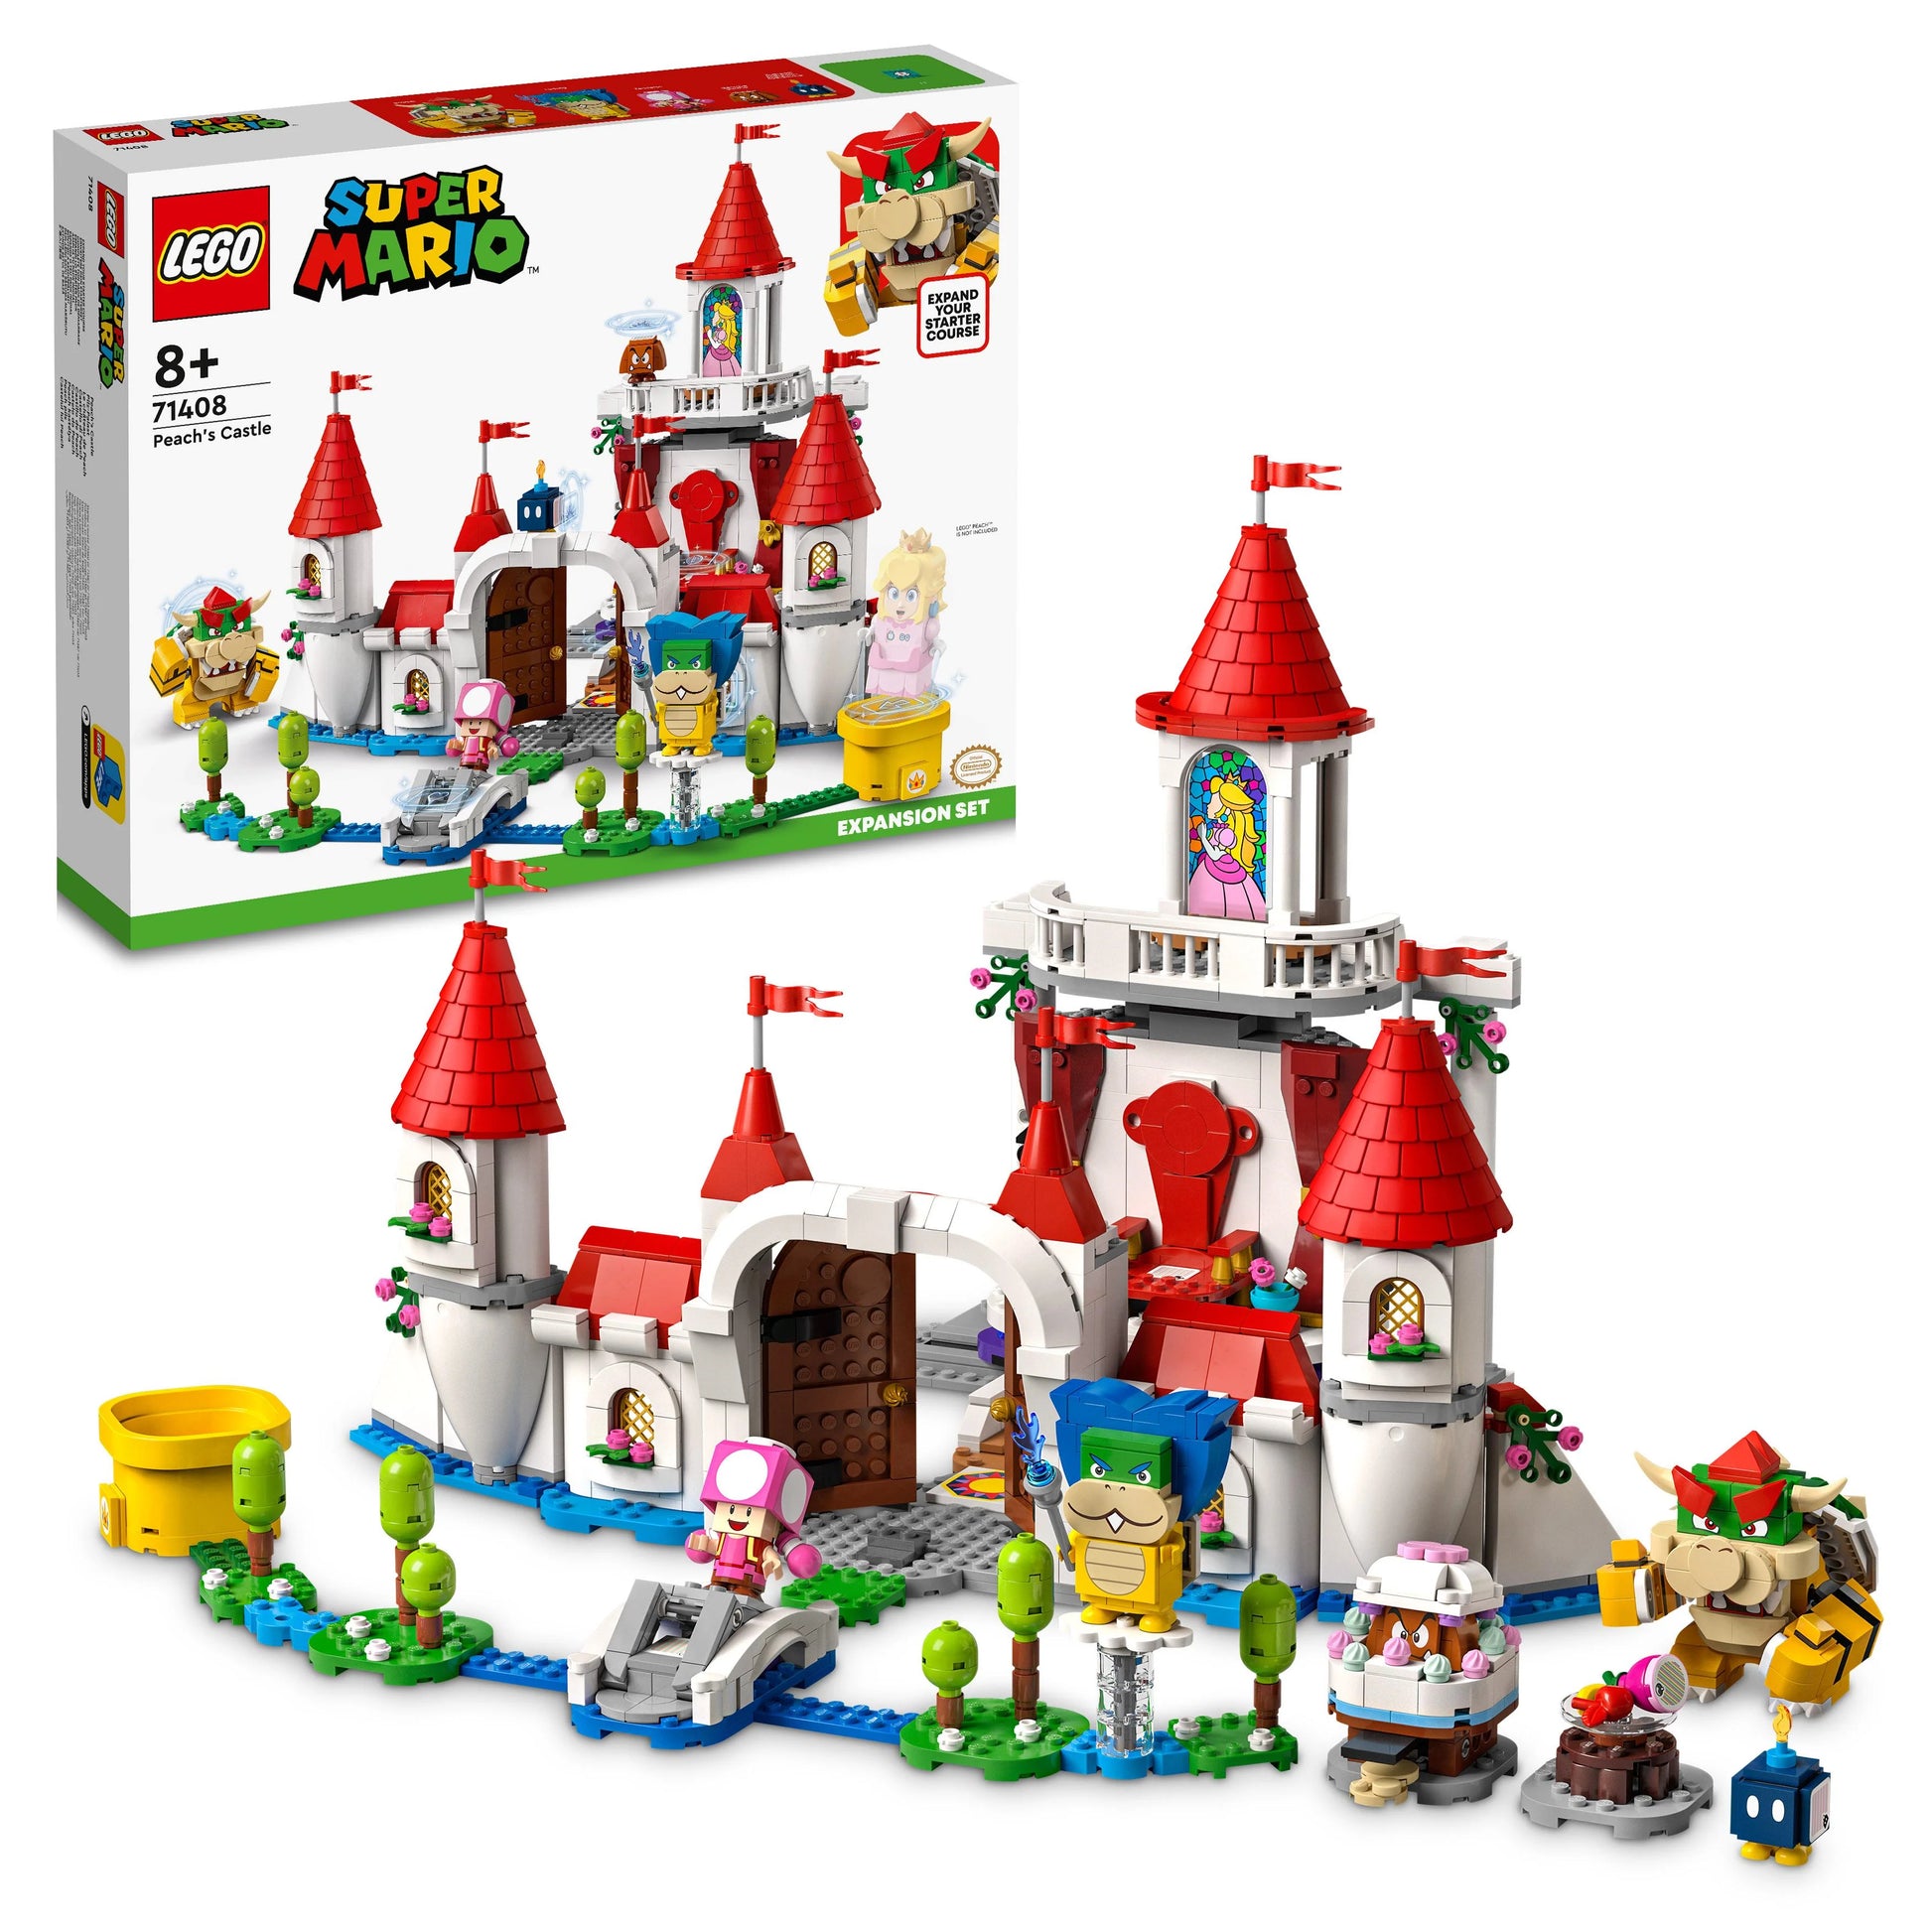 Eindig Bestudeer Dusver Expansion Set: Peach' ™ Castle - LEGO Super Mario – Brugs Brickhouse